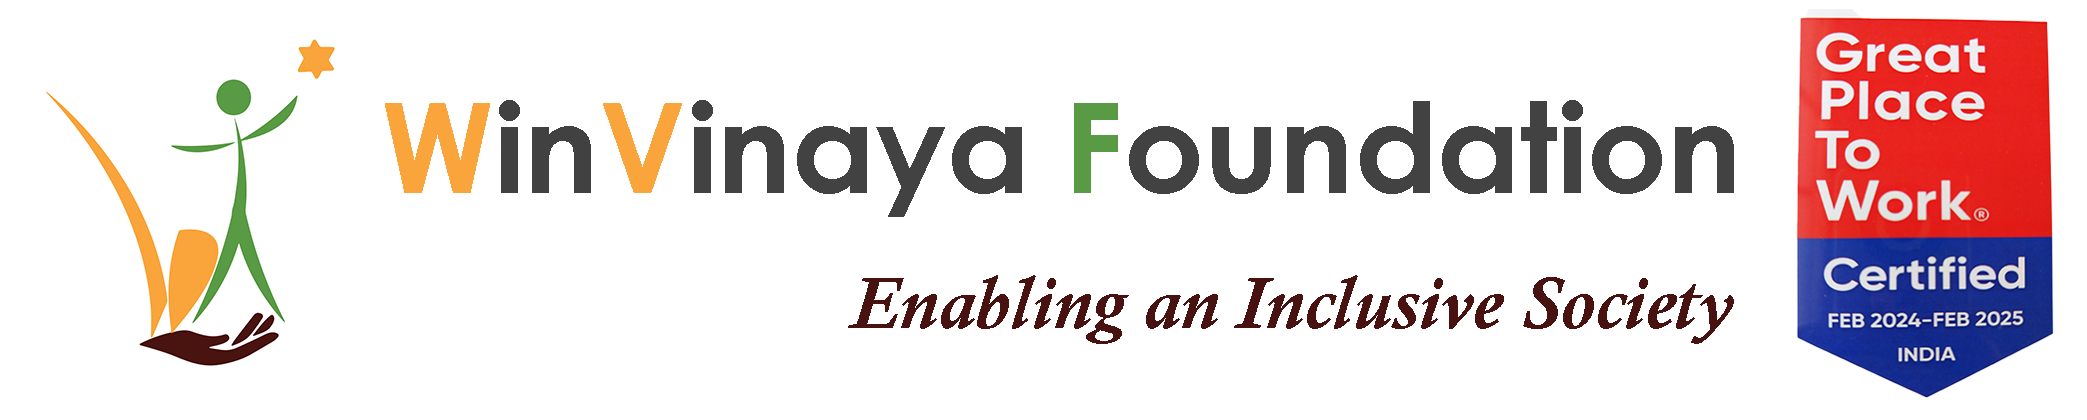 WinVinaya Foundation